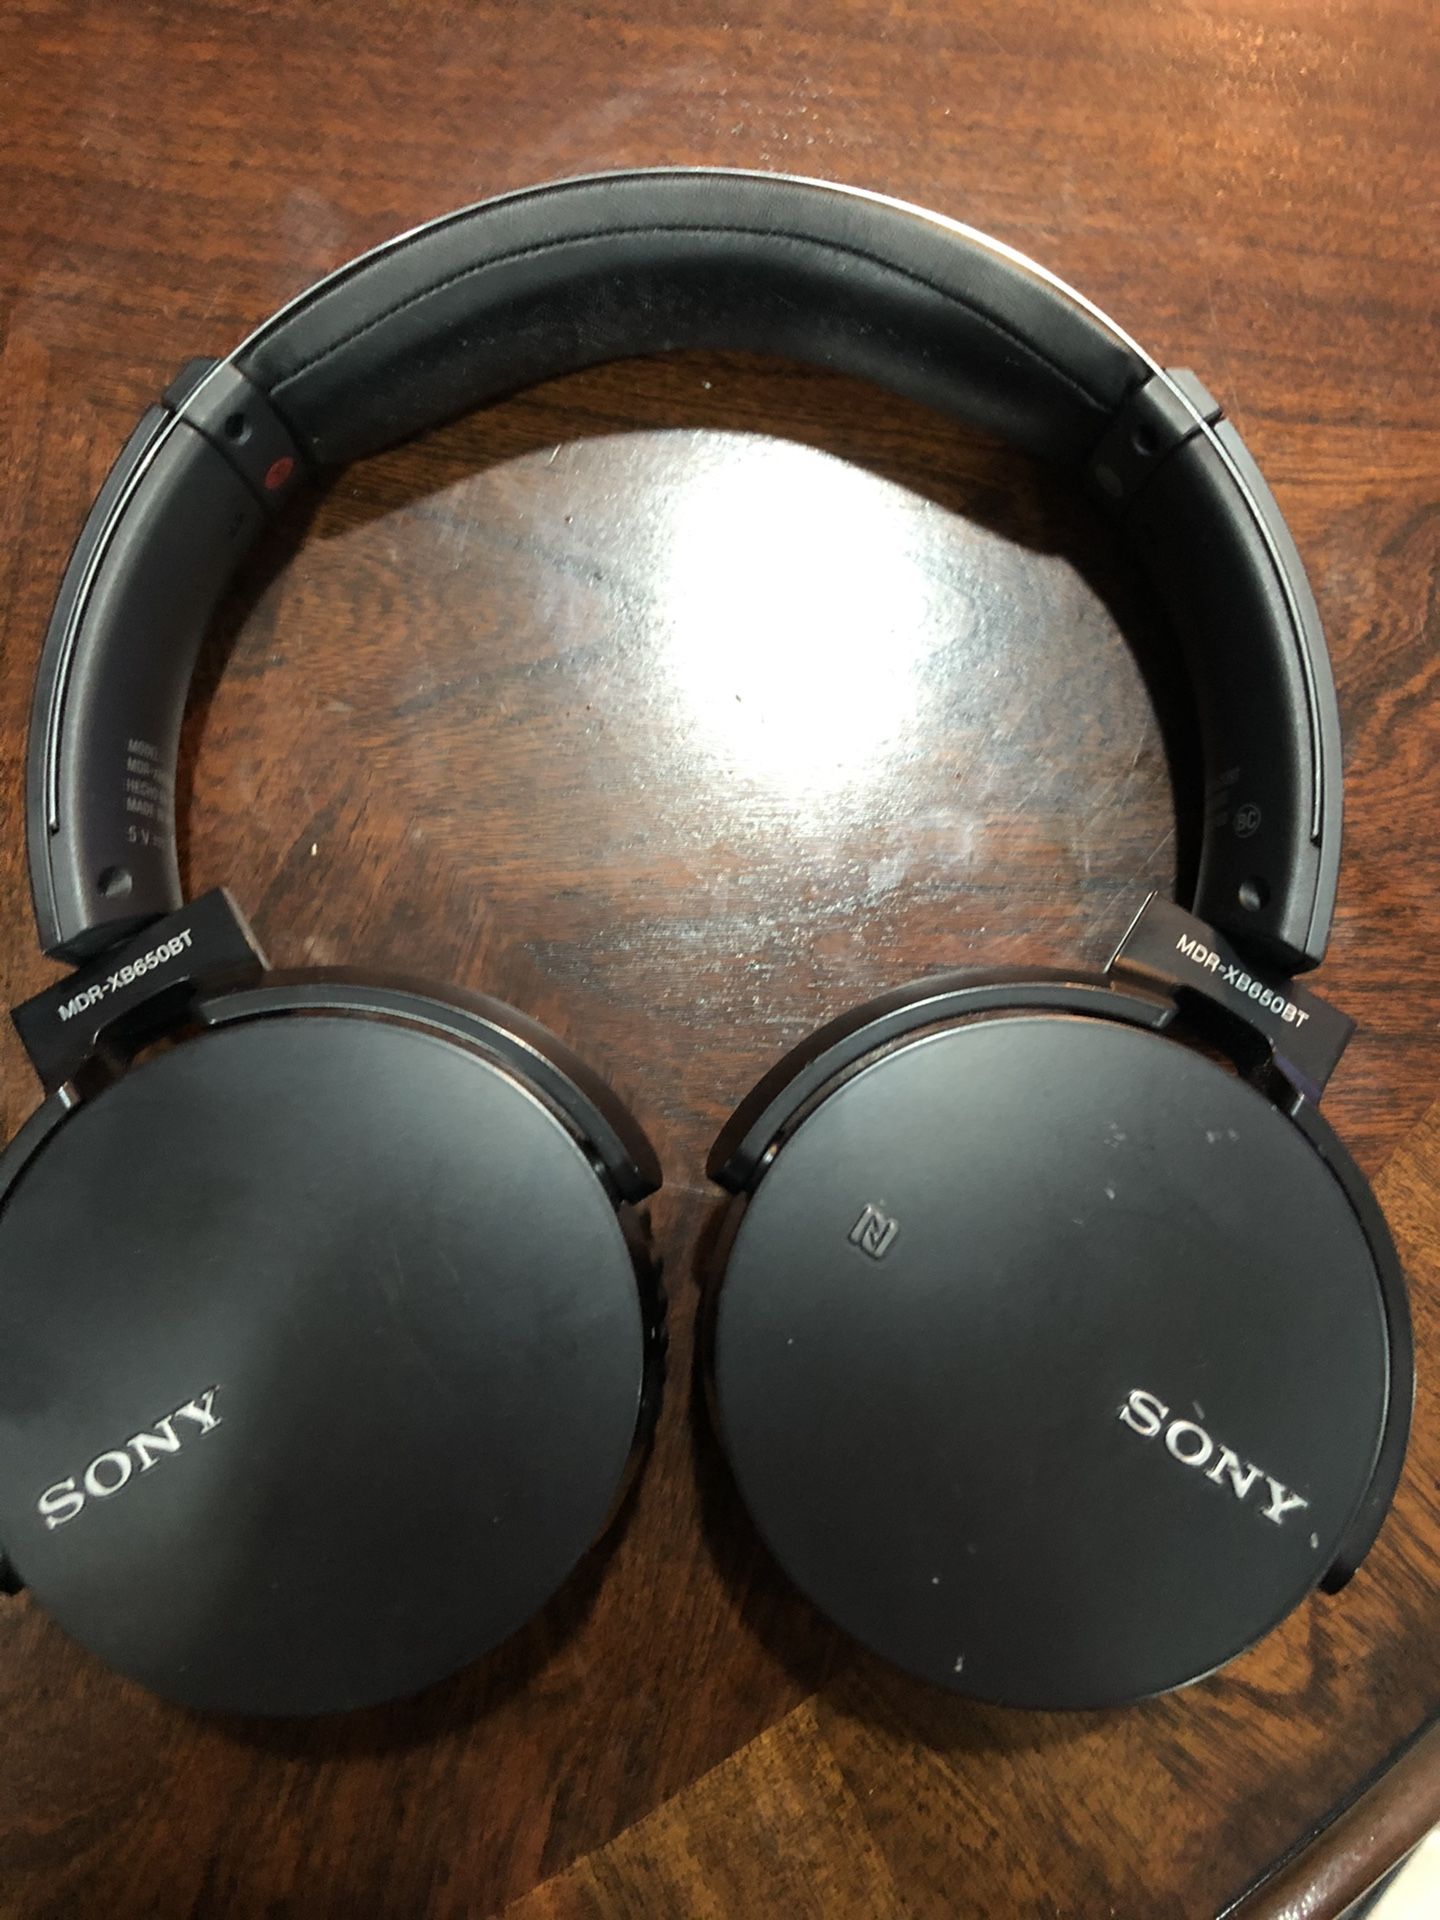 Sony Wireless Headphones model MDR-X650BT